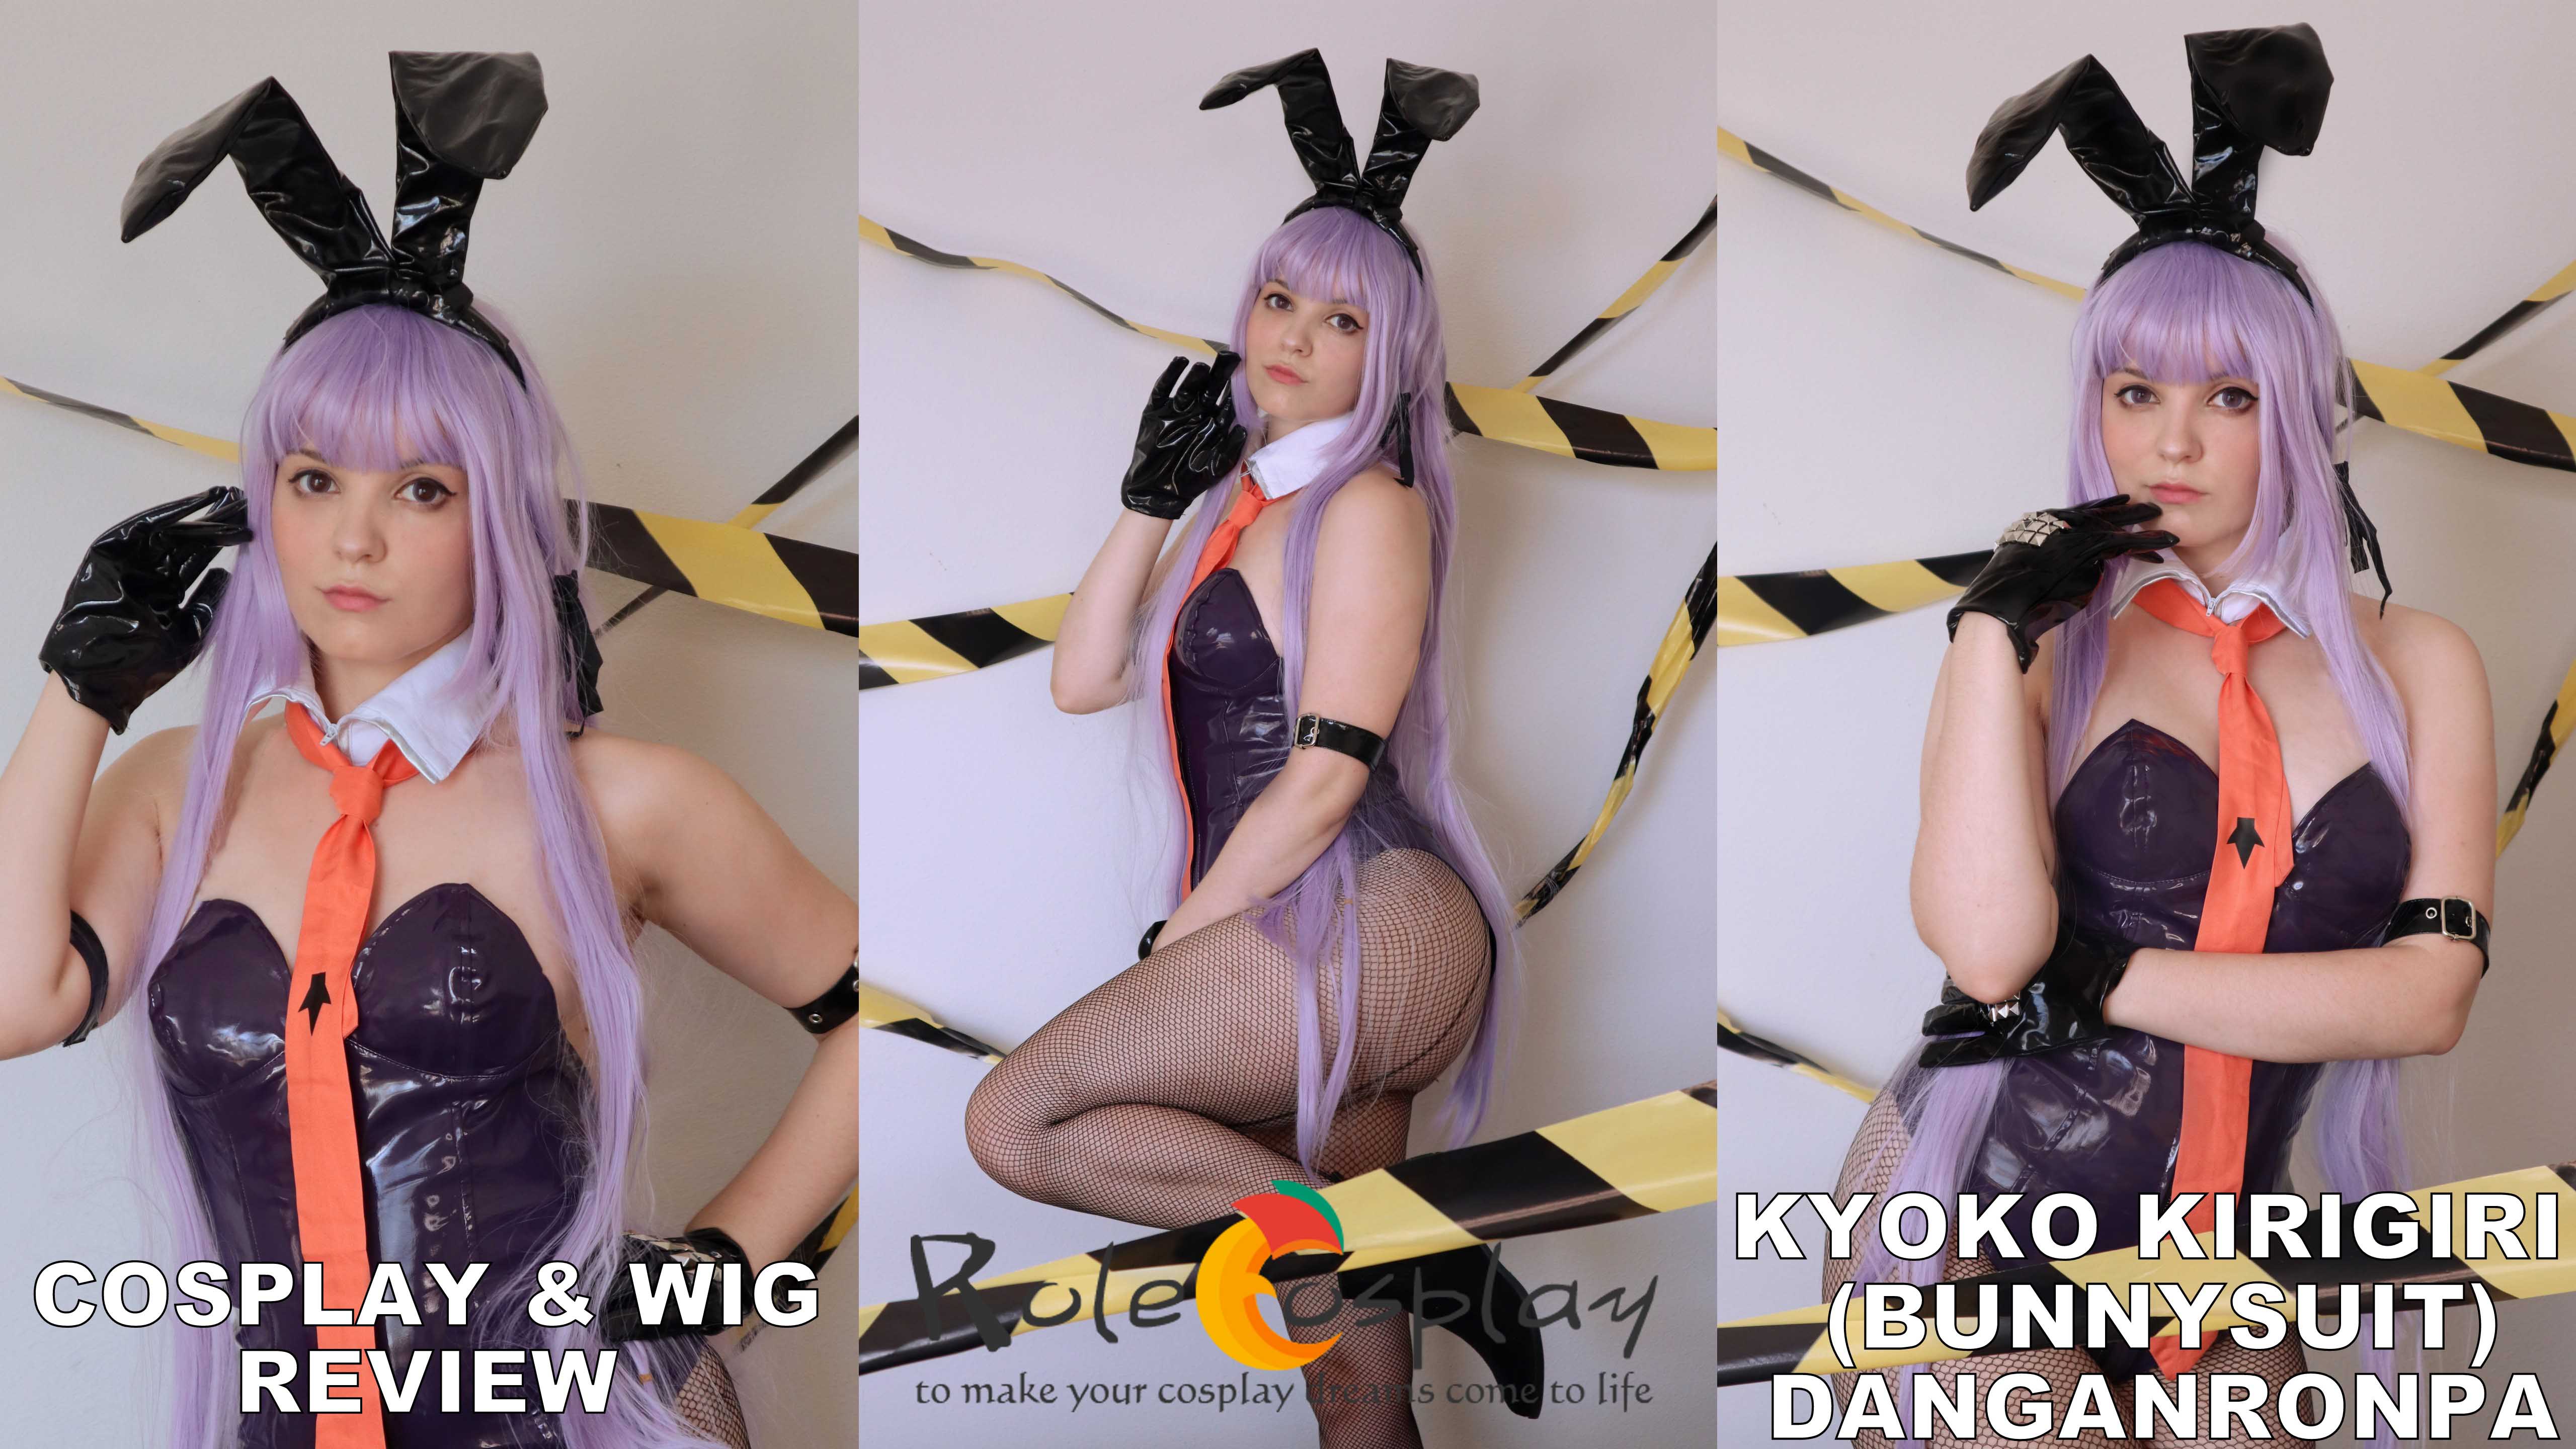 Cosplay & Wig Review: Kyoko Kirigiri Bunnysuit (Danganronpa) from Rolecosplay